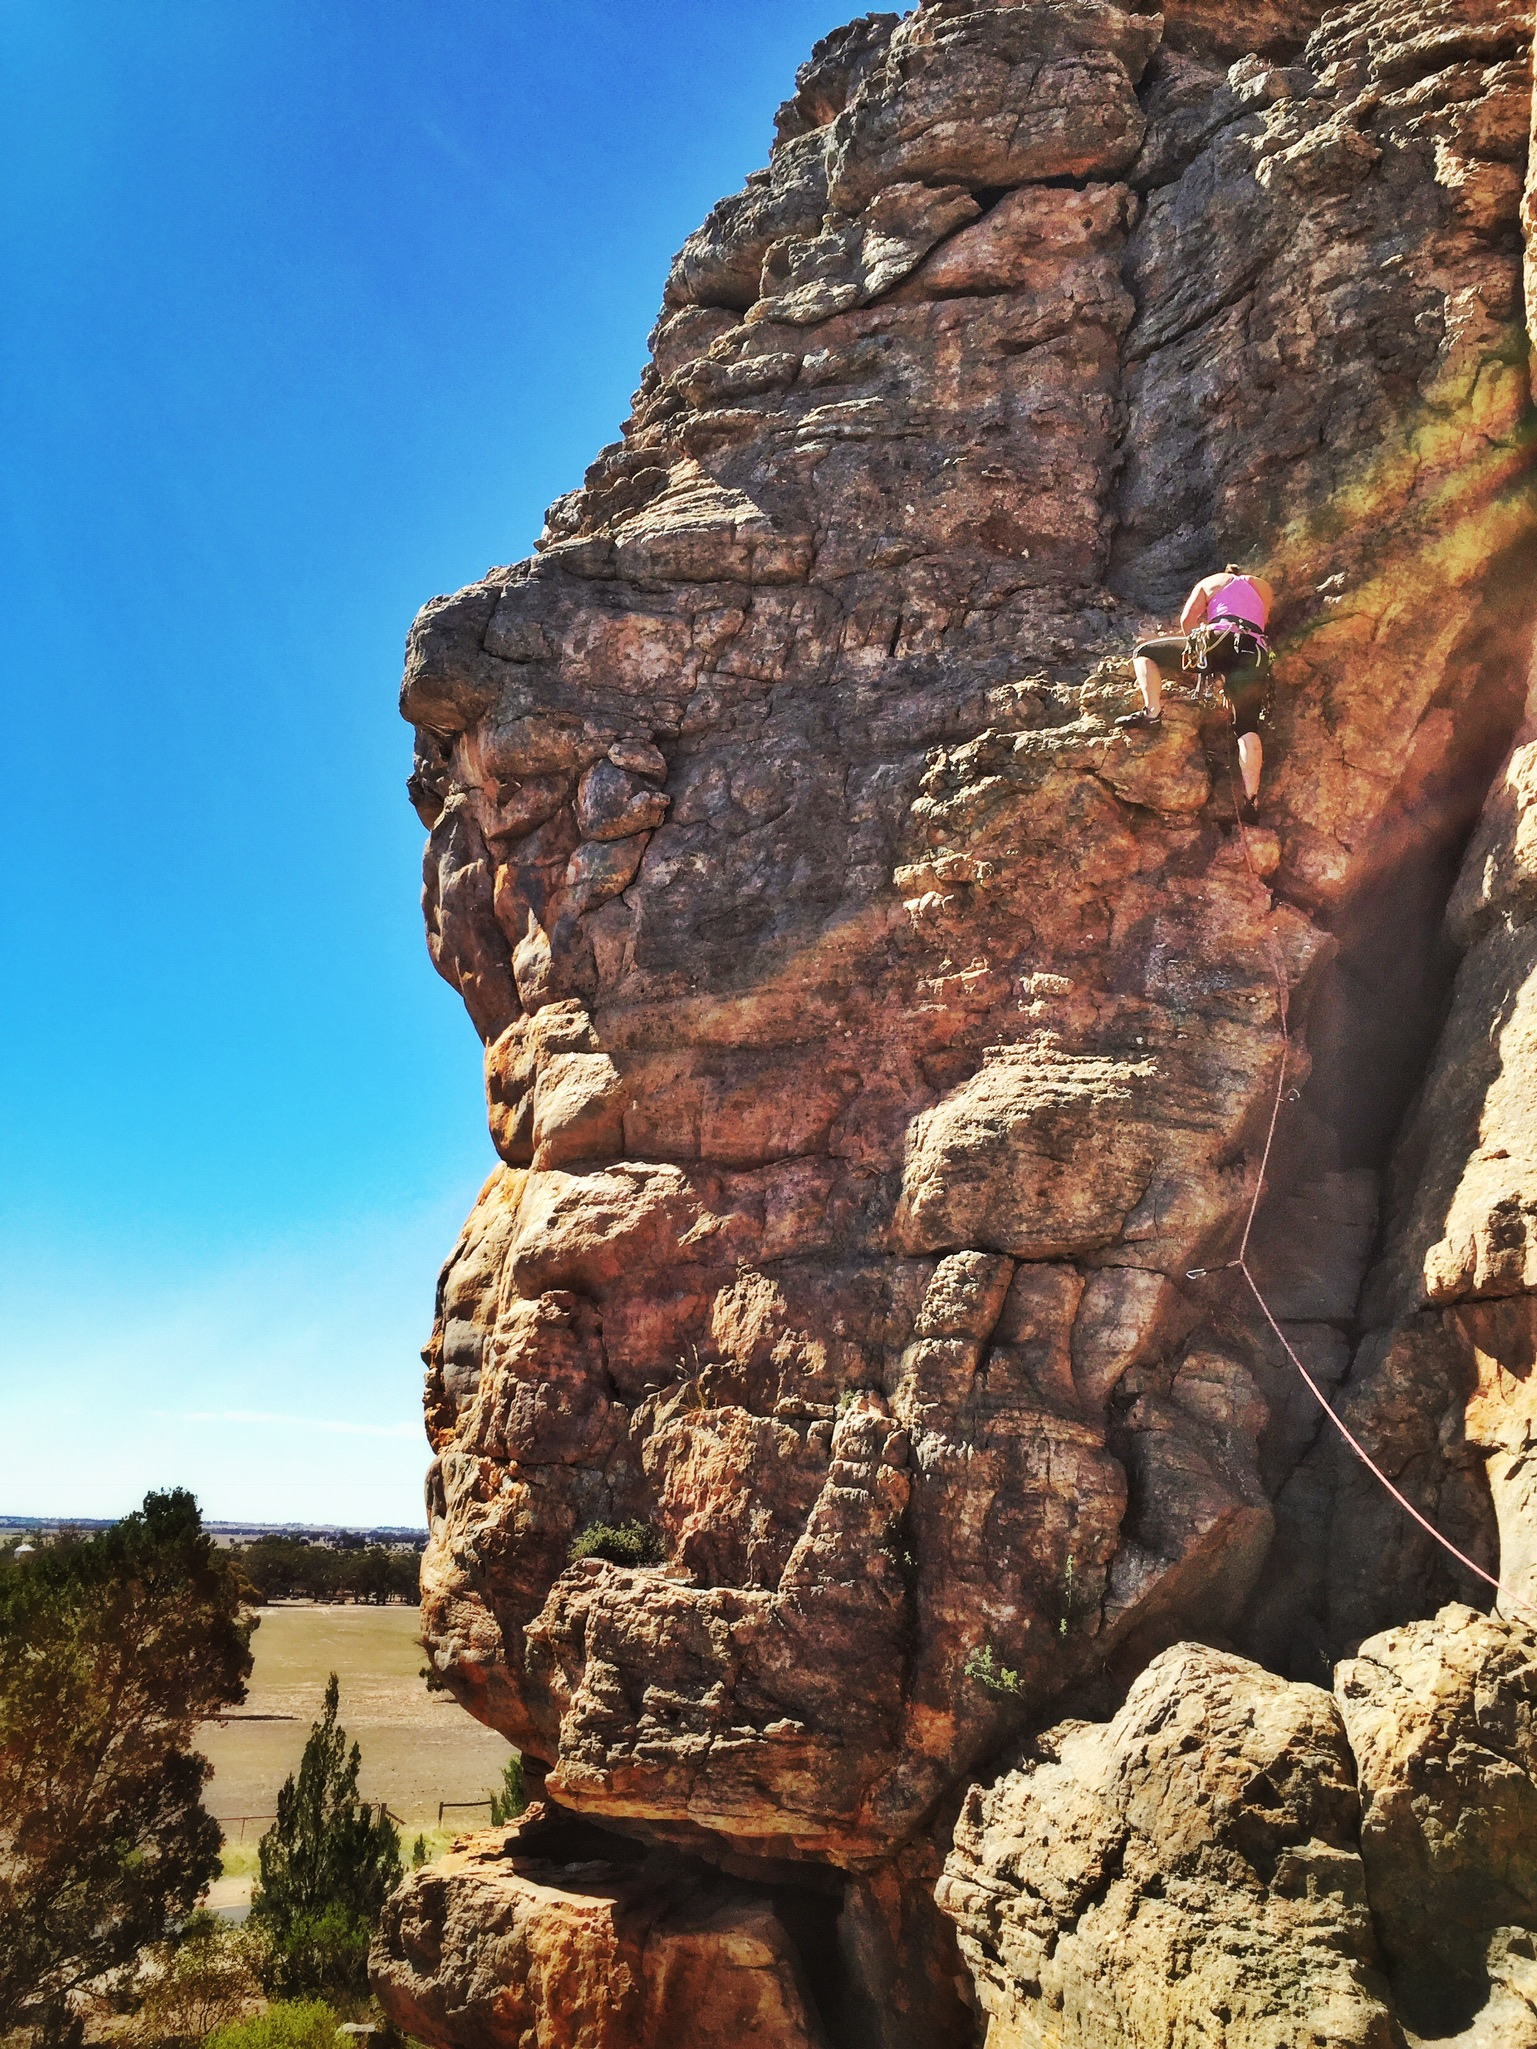 Lead climbing at Mount Arapiles, Australia